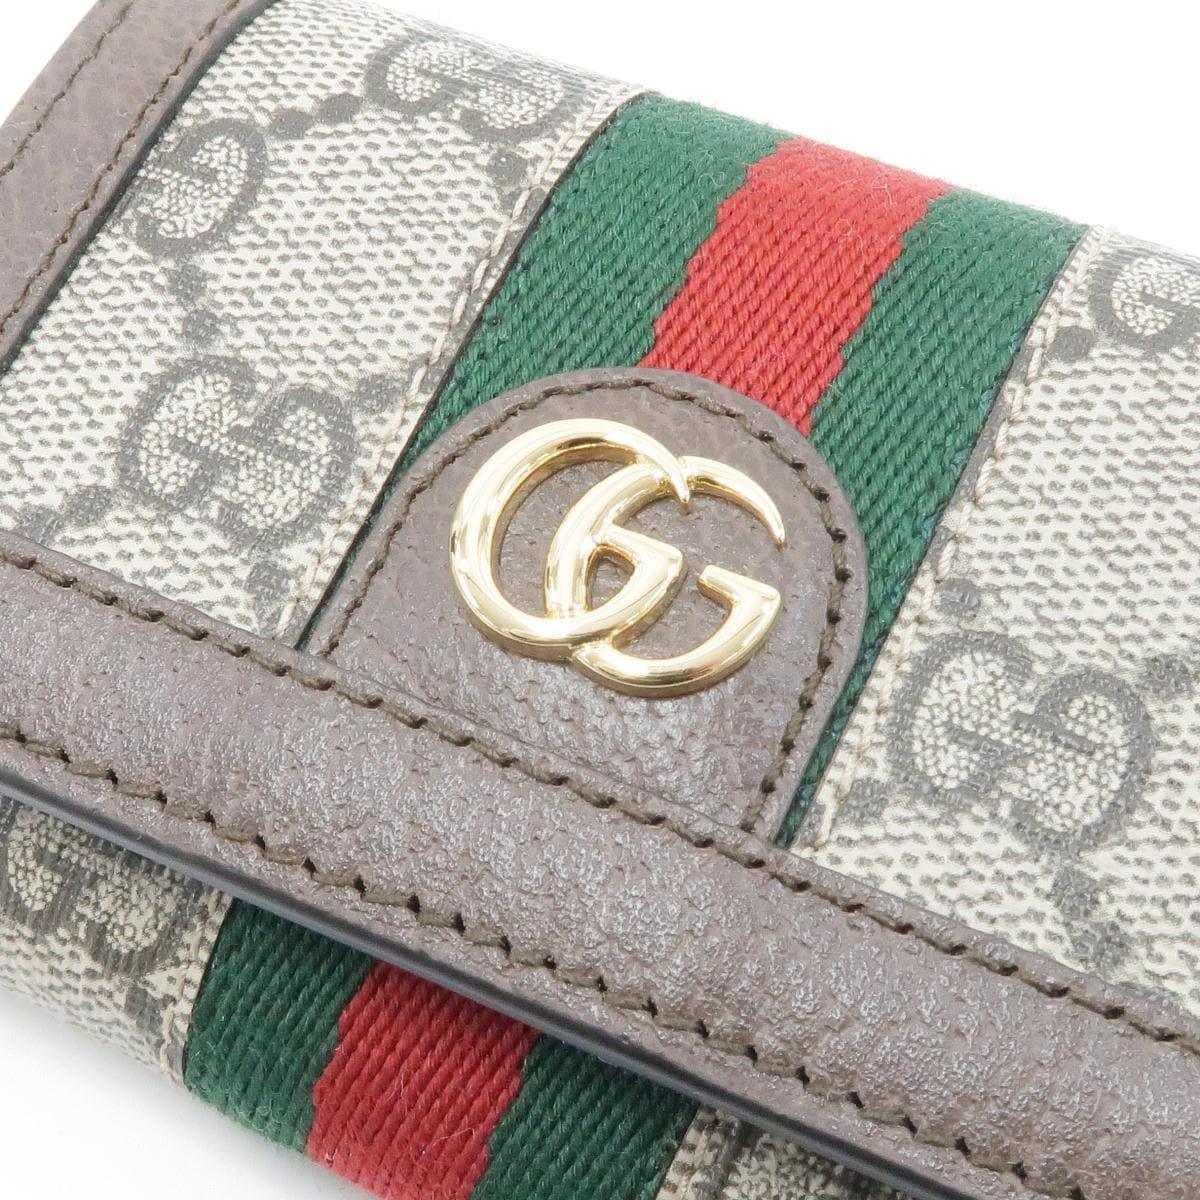 [BRAND NEW] Gucci Wallet 644334 96IWG